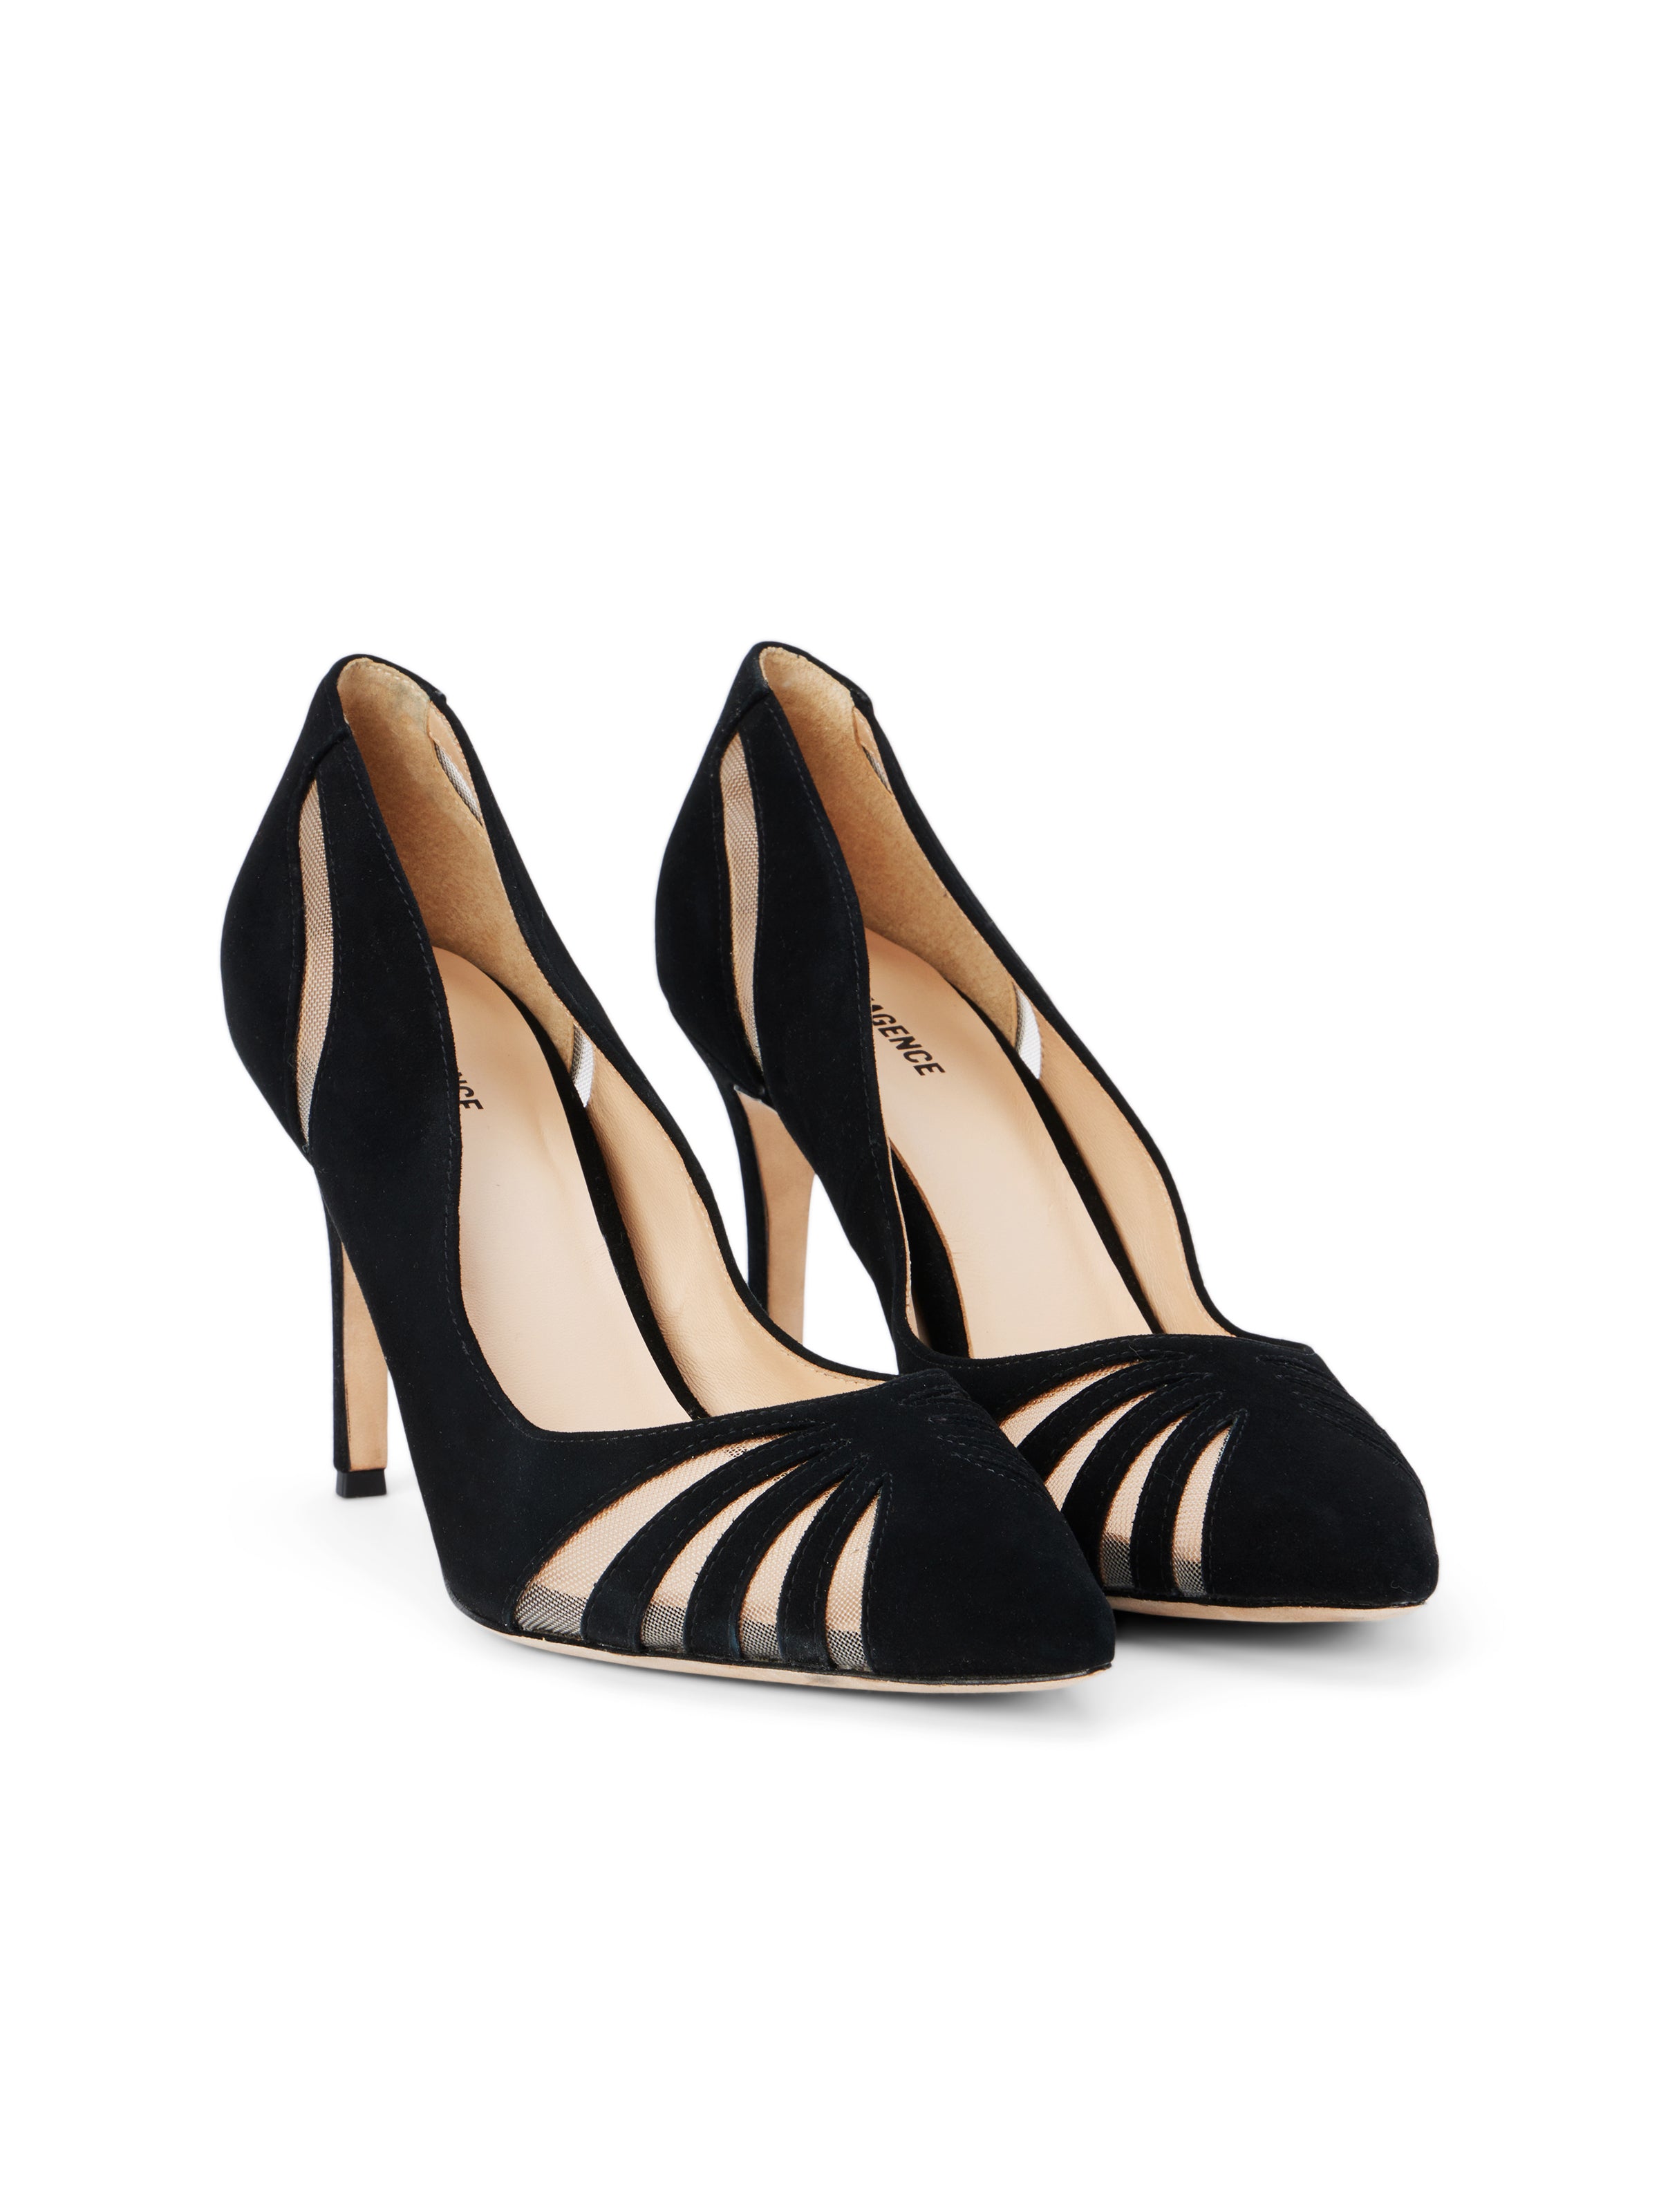 Buy Black Suede Heeled Sandals for Women by Dune London Online | Ajio.com